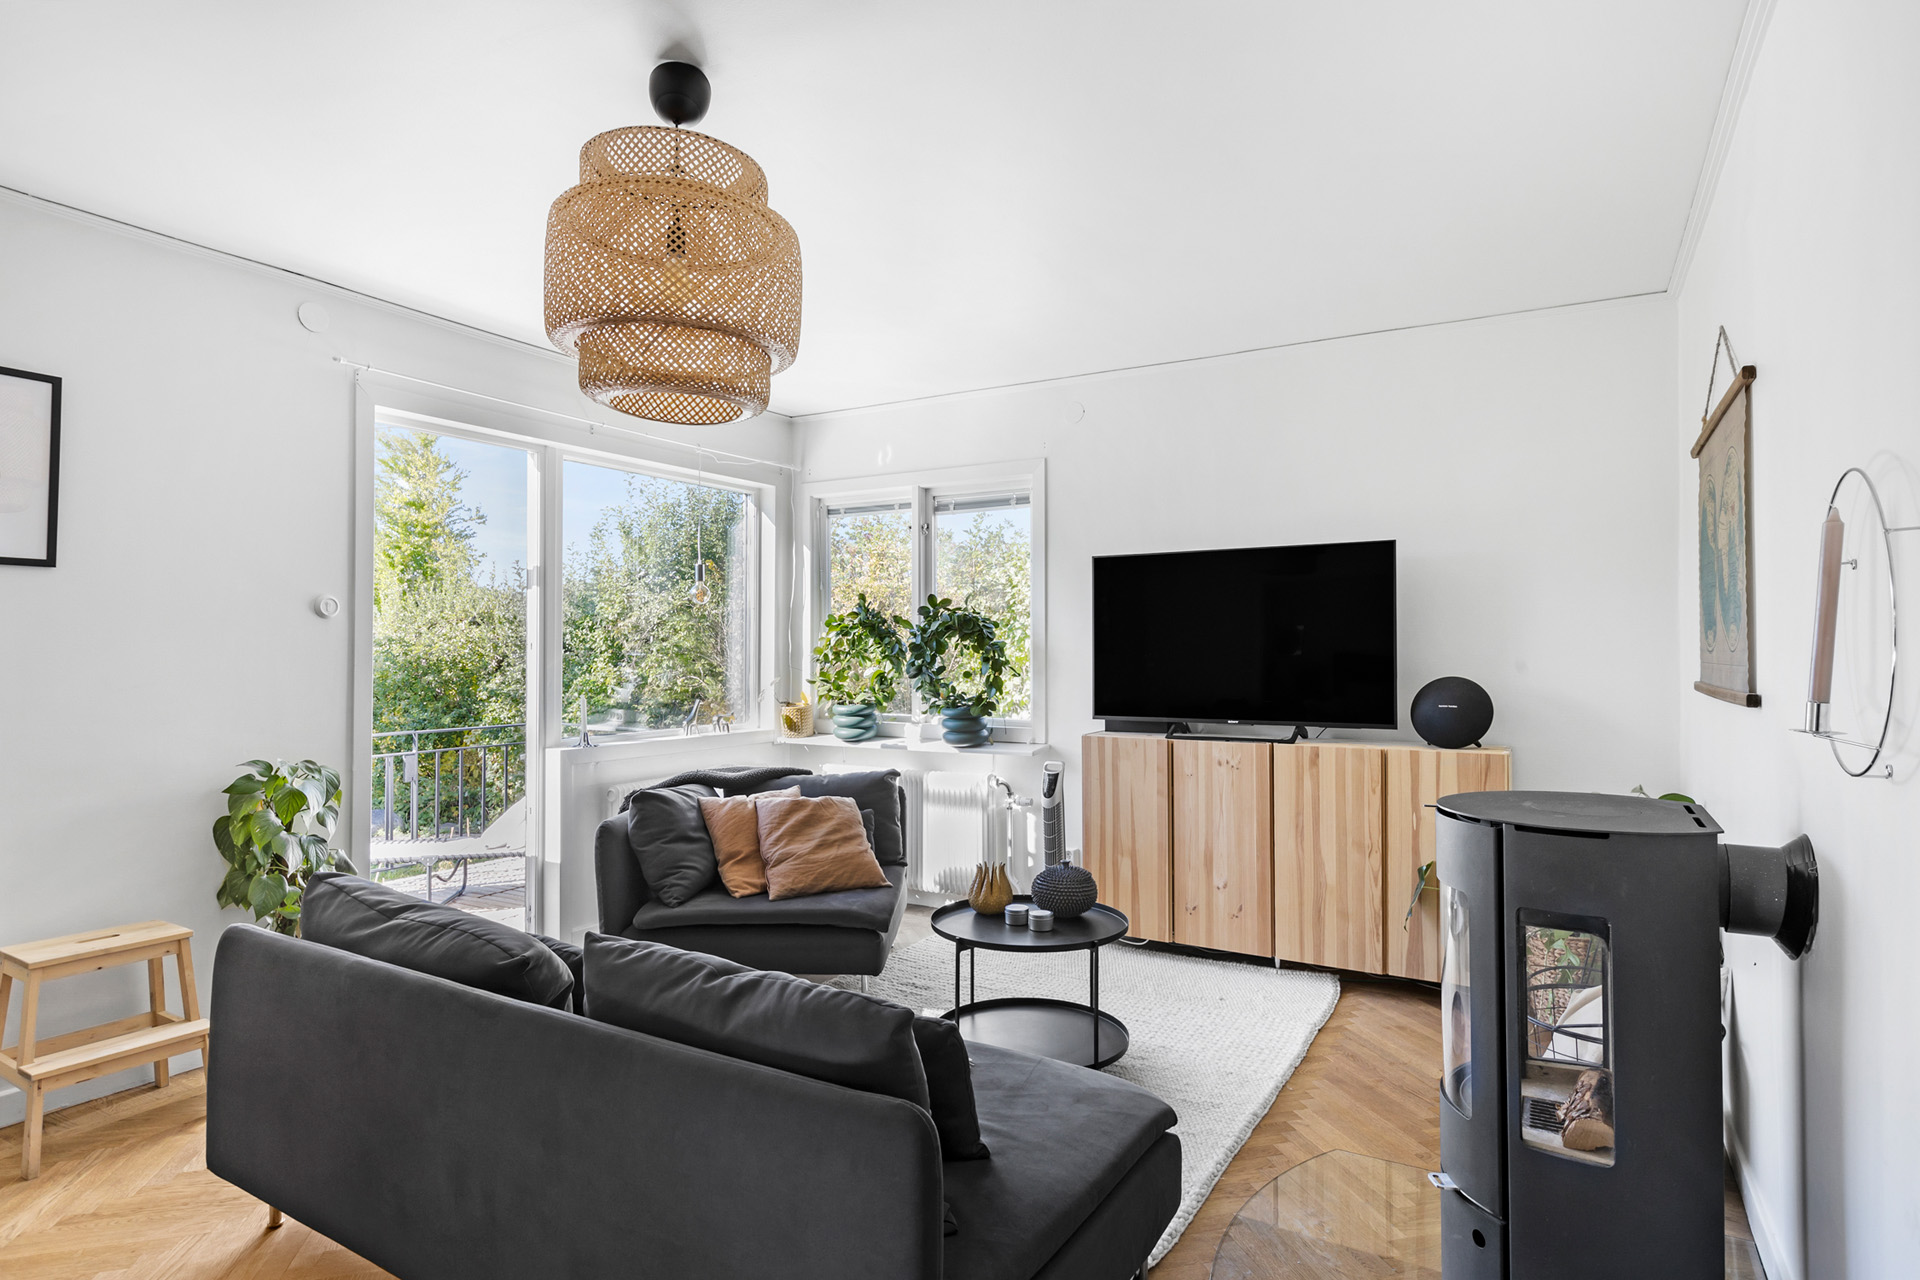 sälja bostad möblerat vardagsrum med balkong elitefast